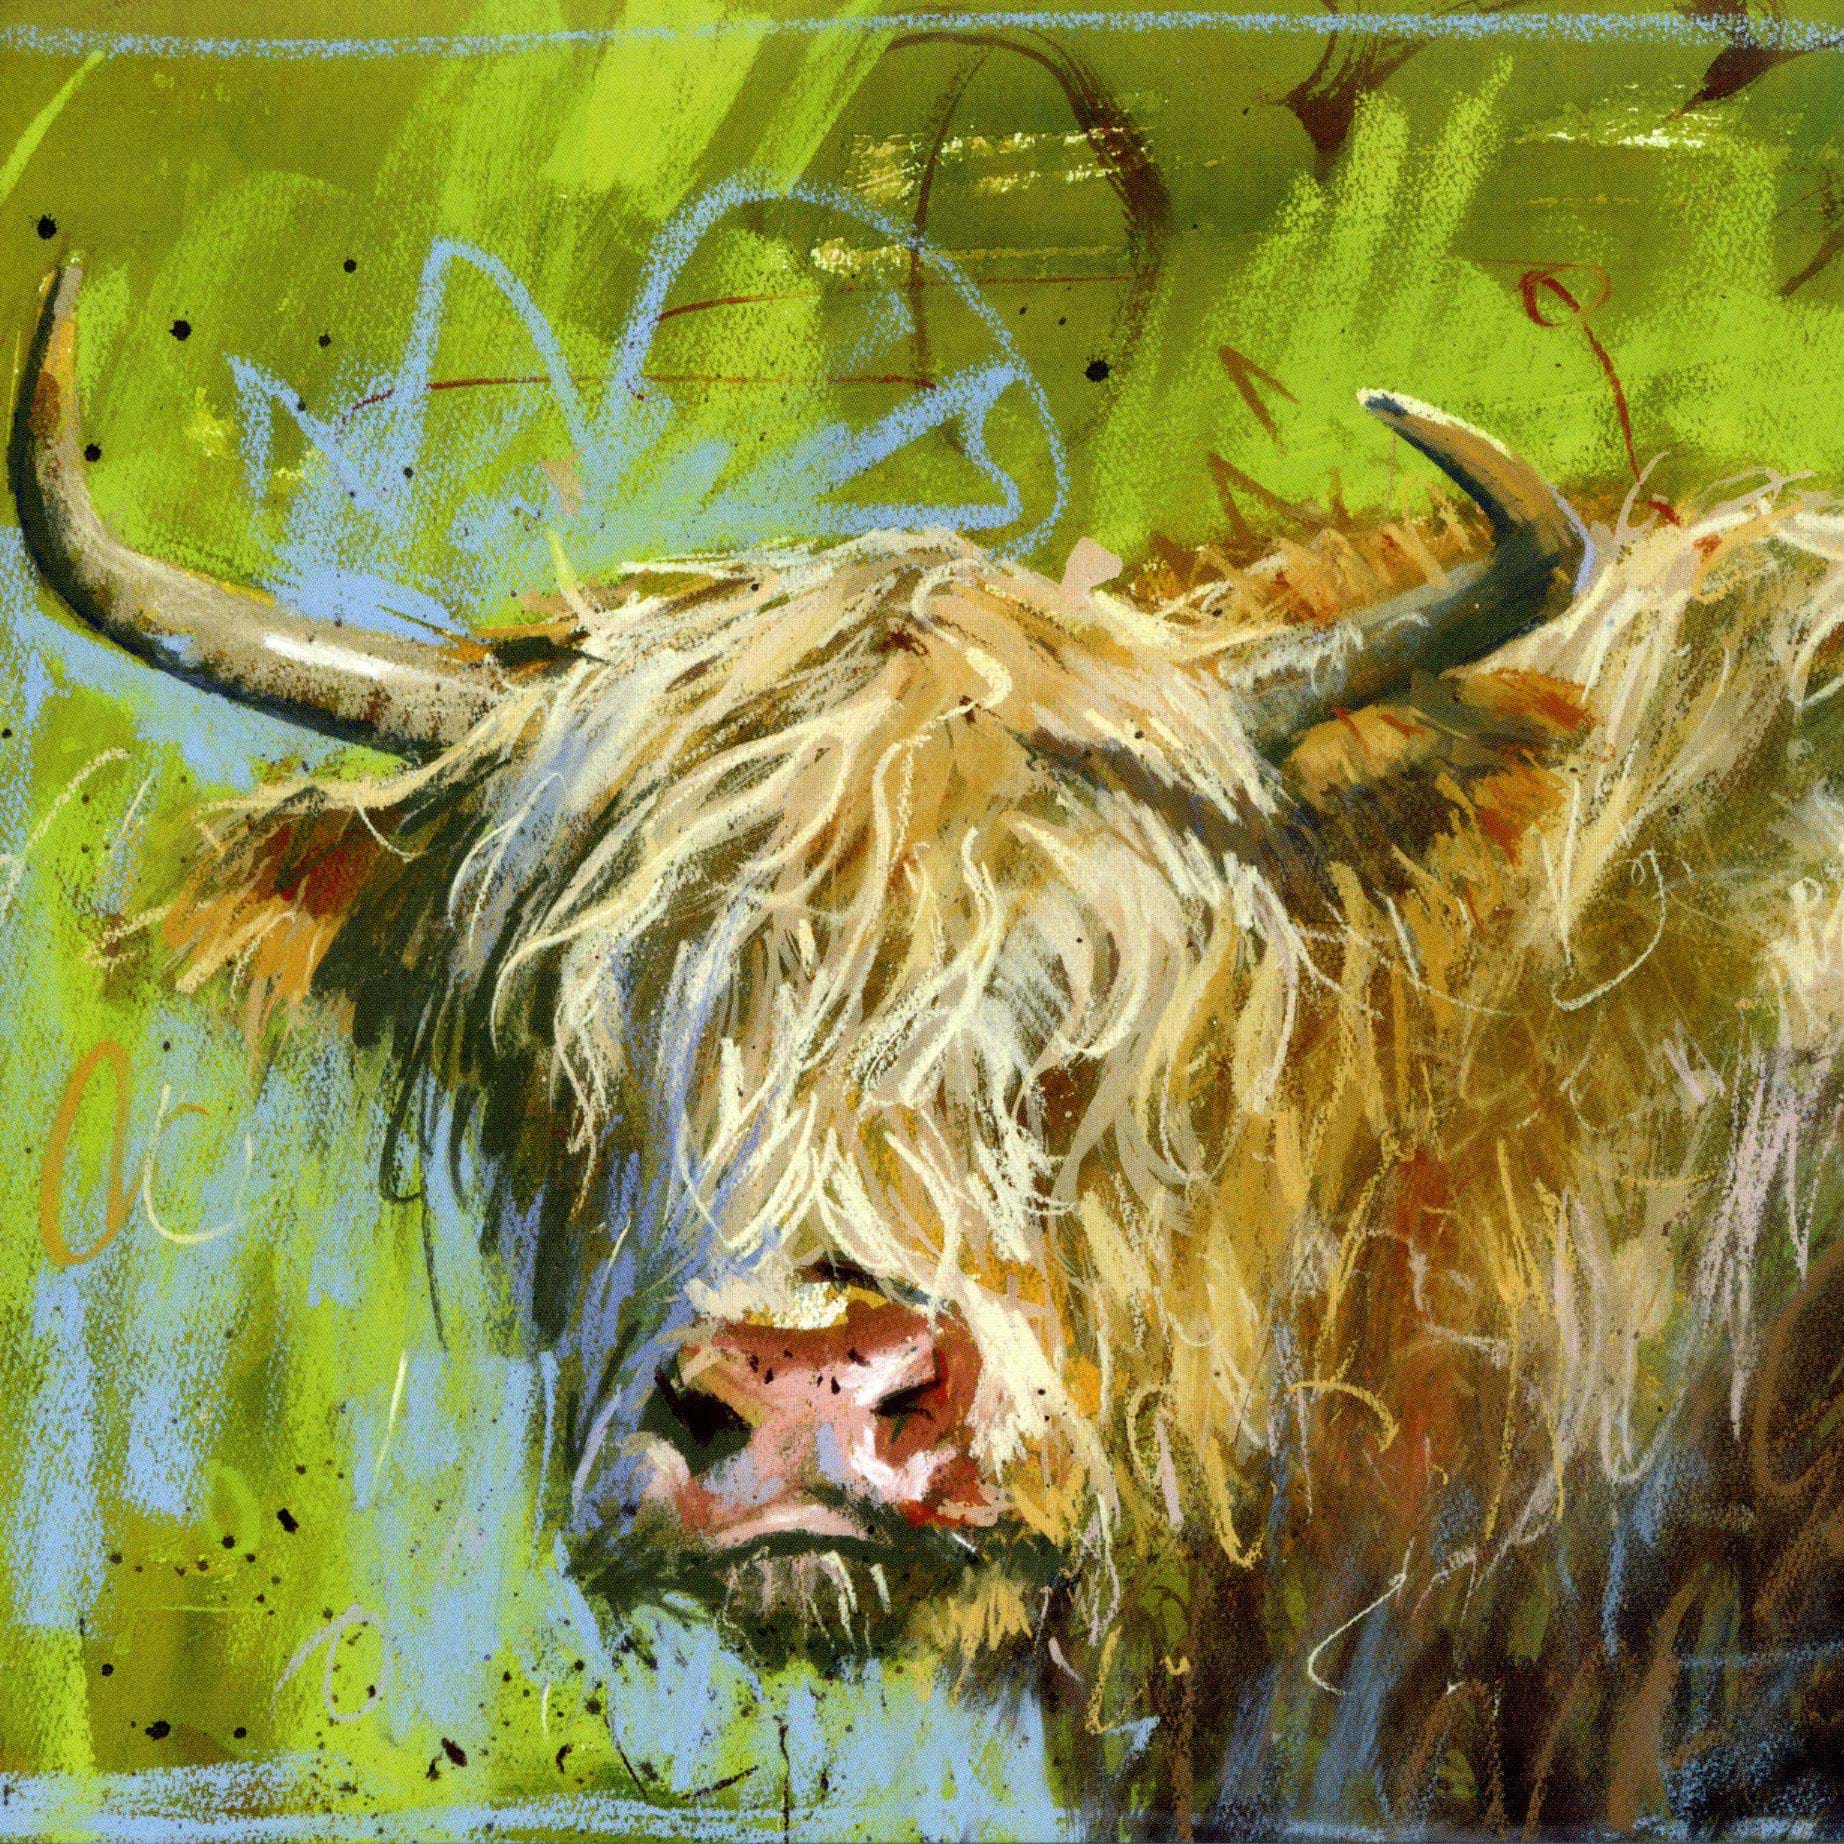 Highland Cow Greeting Card